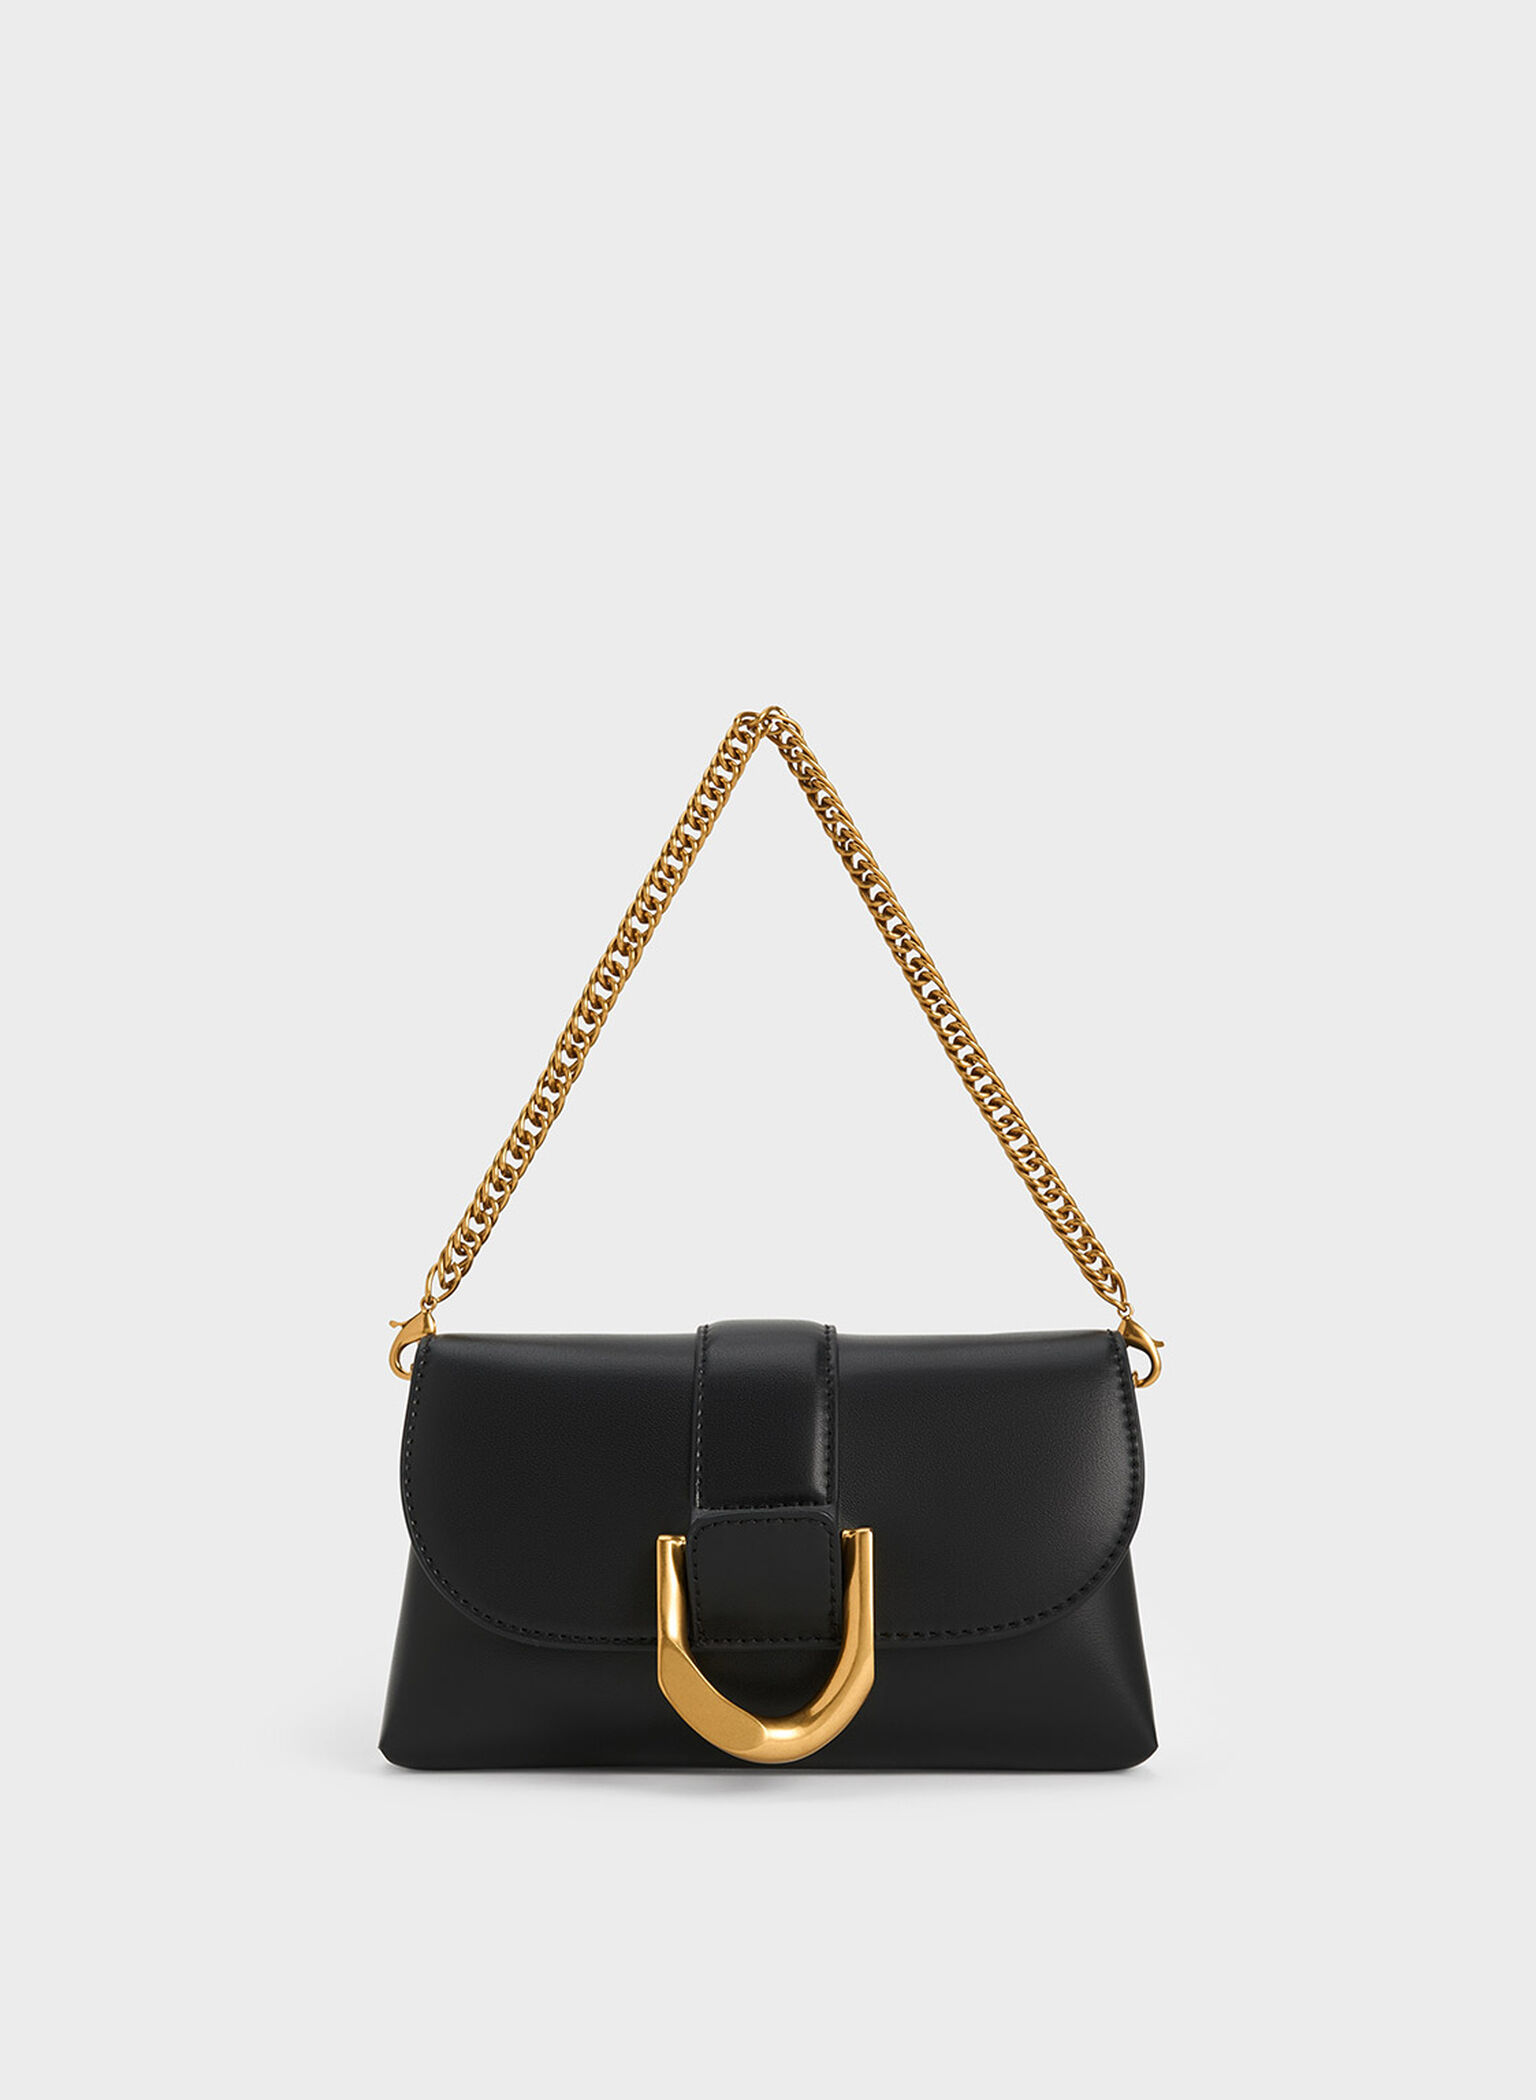 chanel black mini crossbody purse